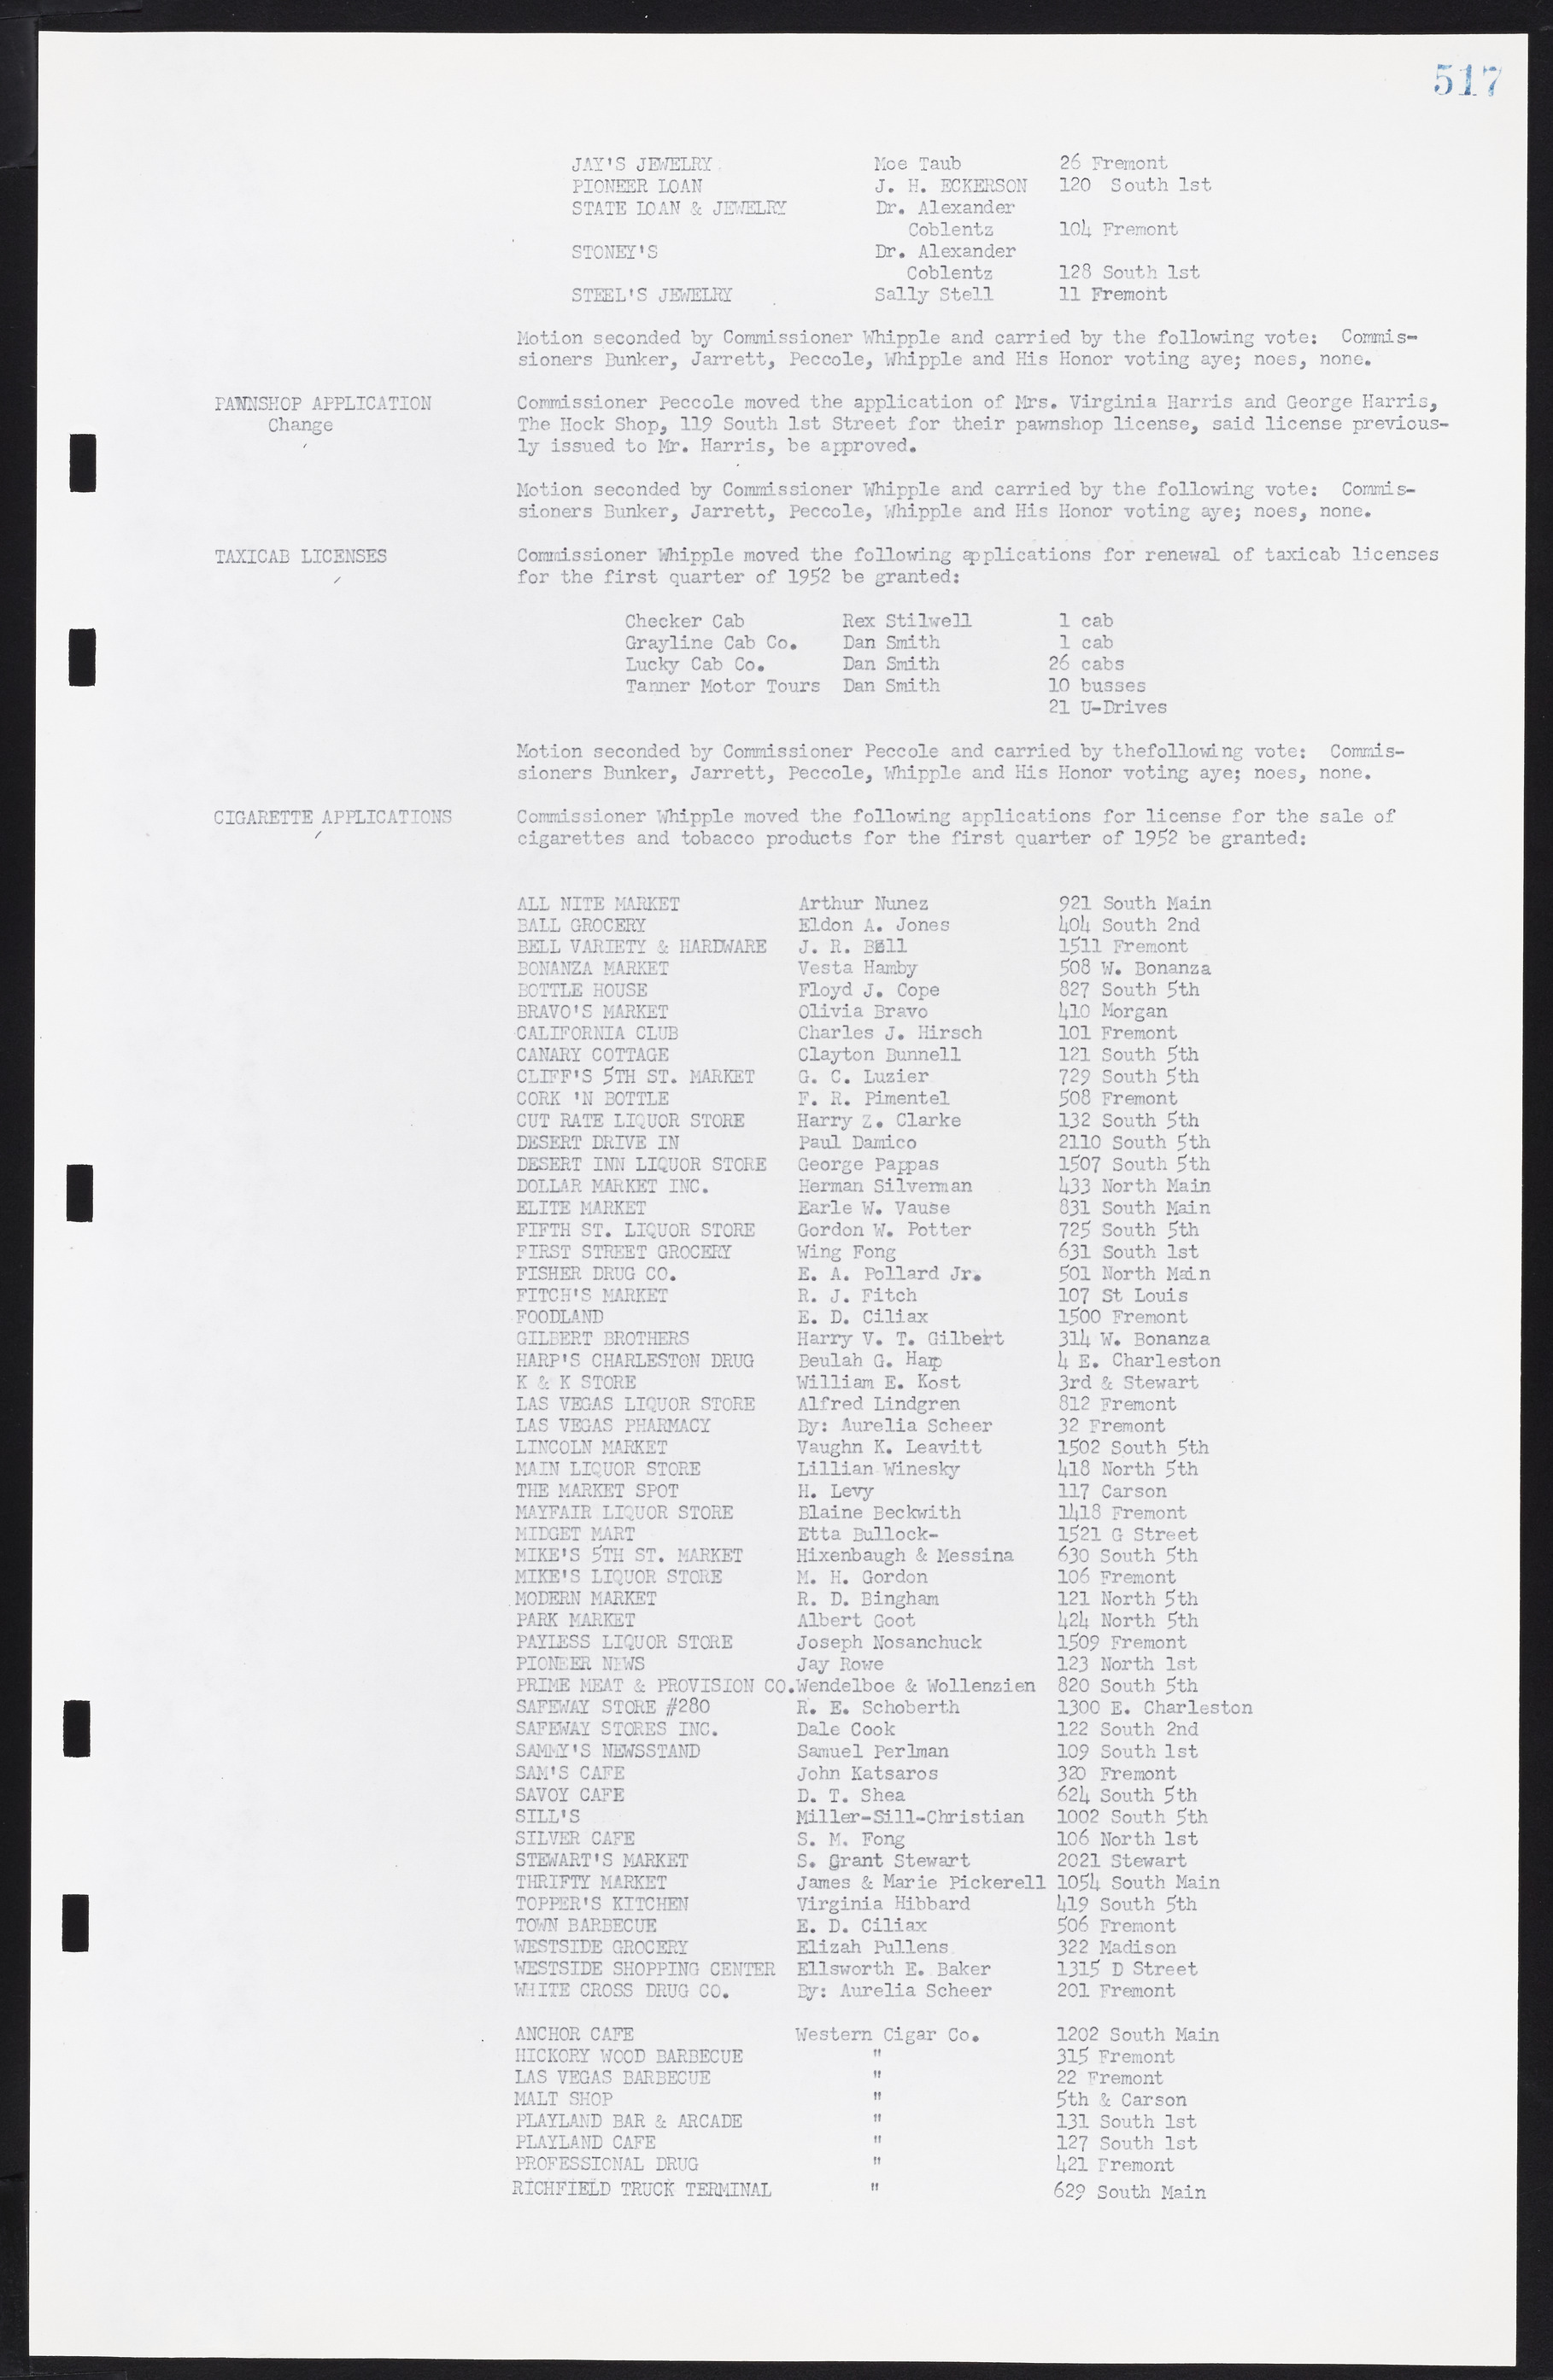 Las Vegas City Commission Minutes, November 7, 1949 to May 21, 1952, lvc000007-535